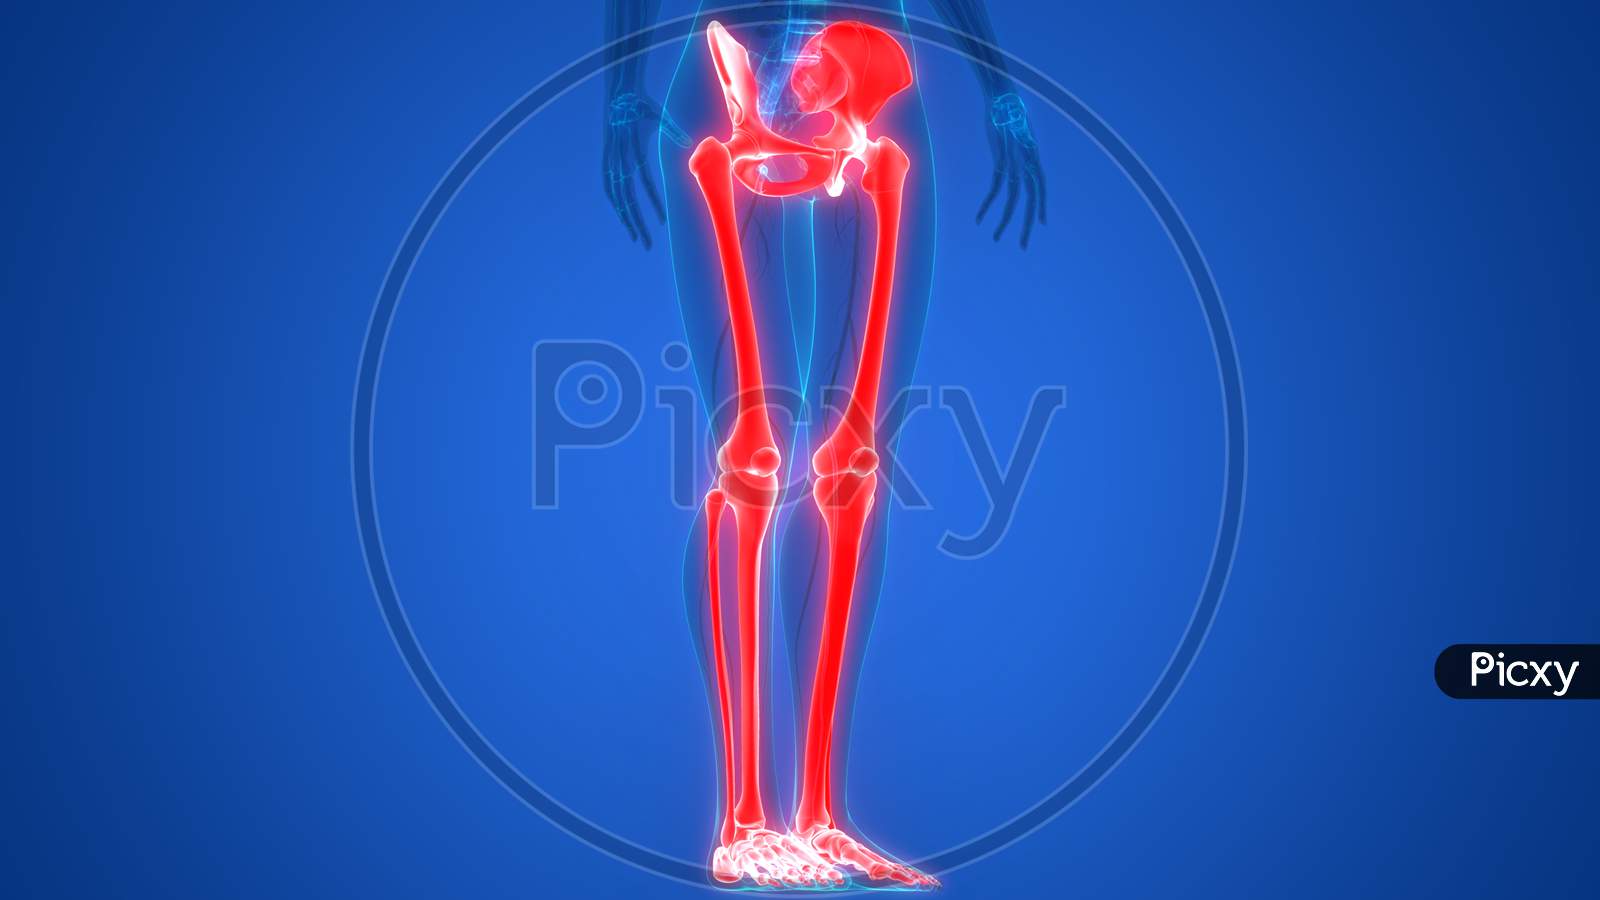 Human Body Skeleton of Legs Anatomy